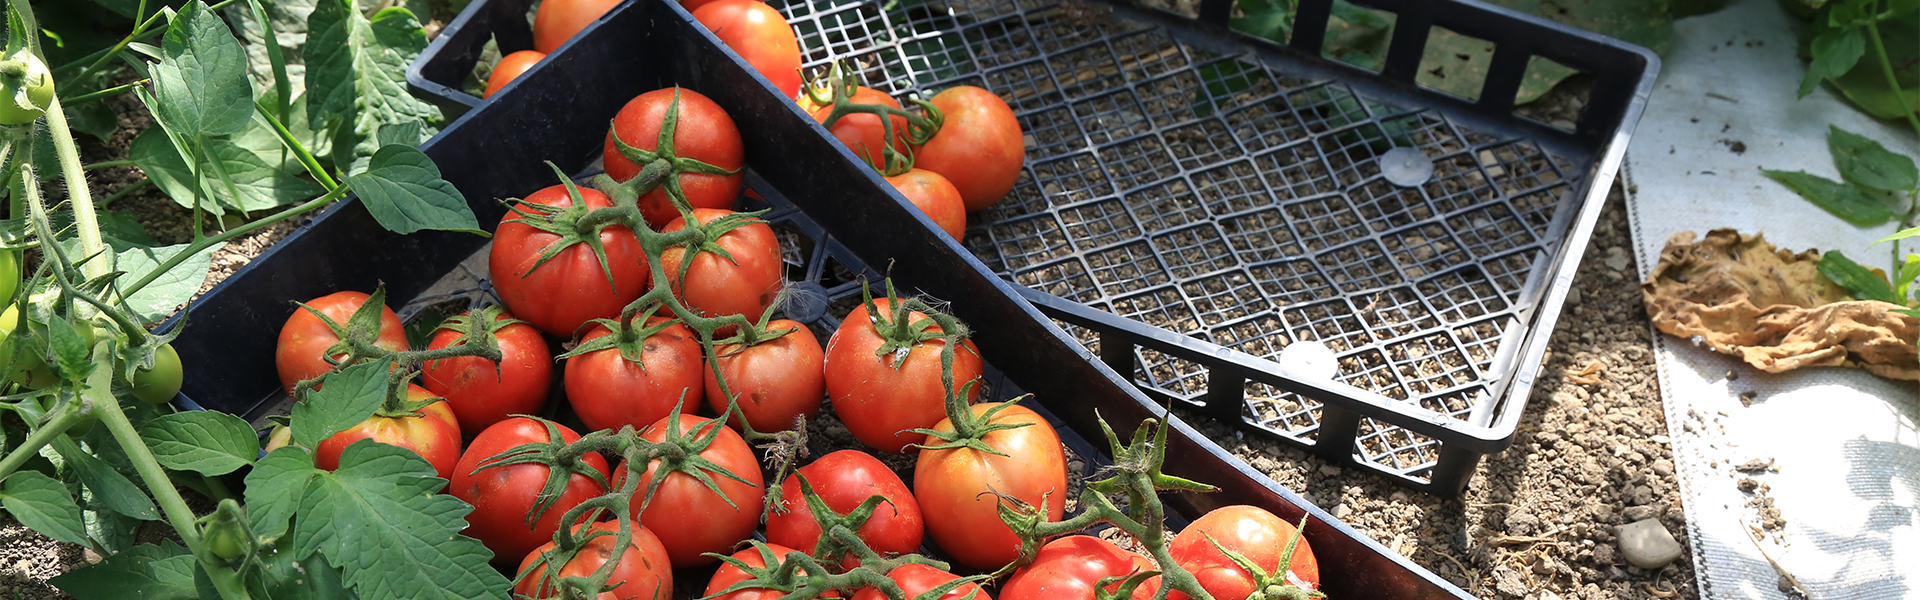 freshly-picked tomatoes